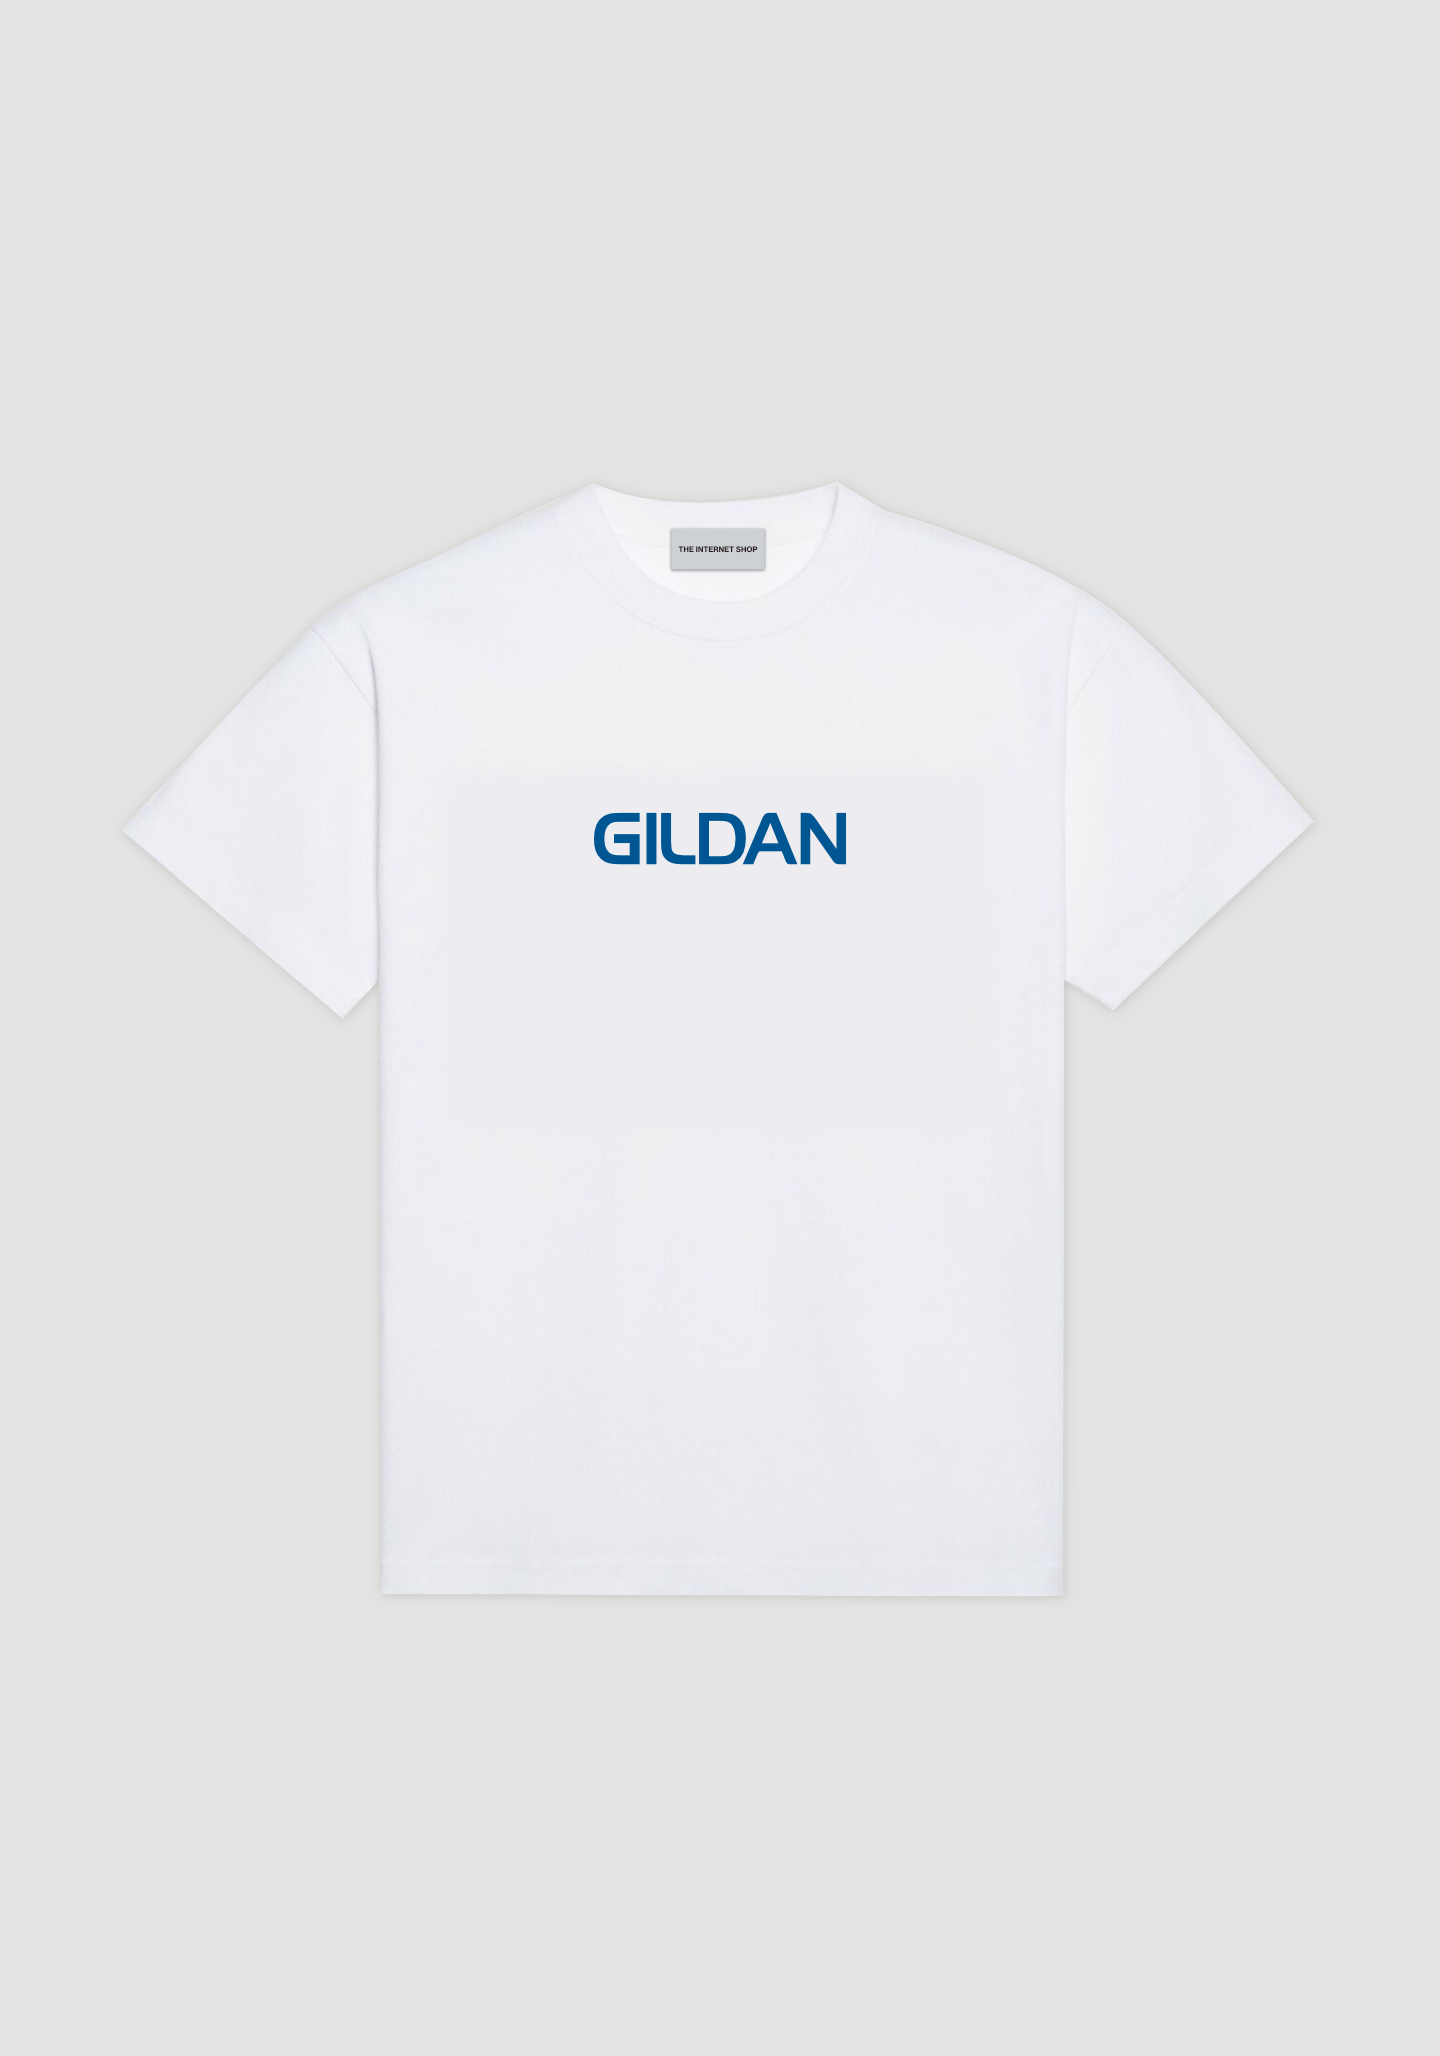 Gildan Shirt